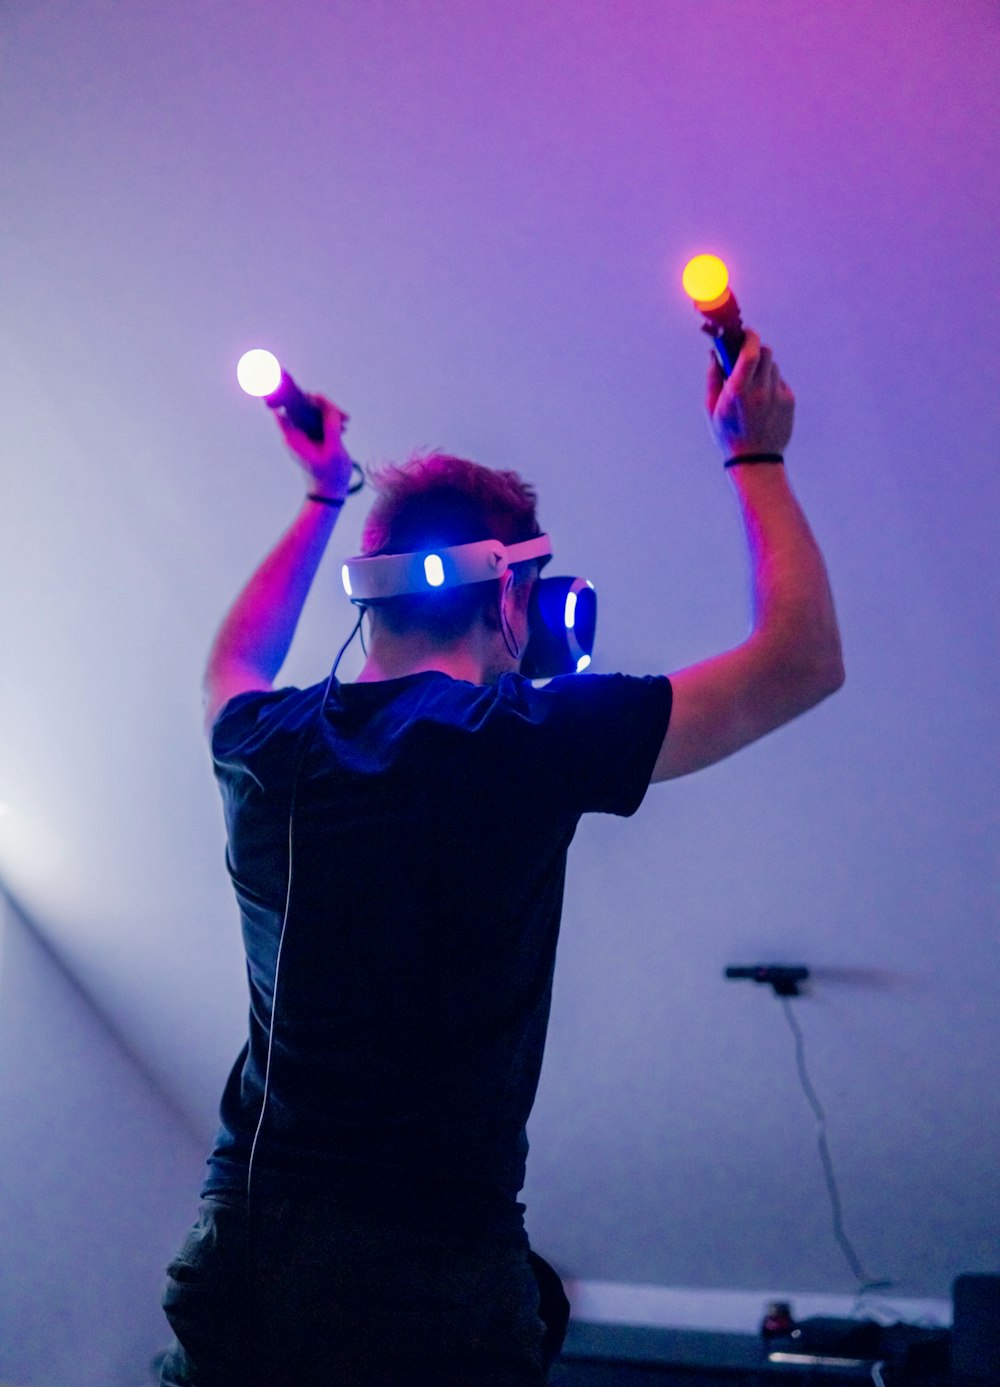 man playing using VR headset